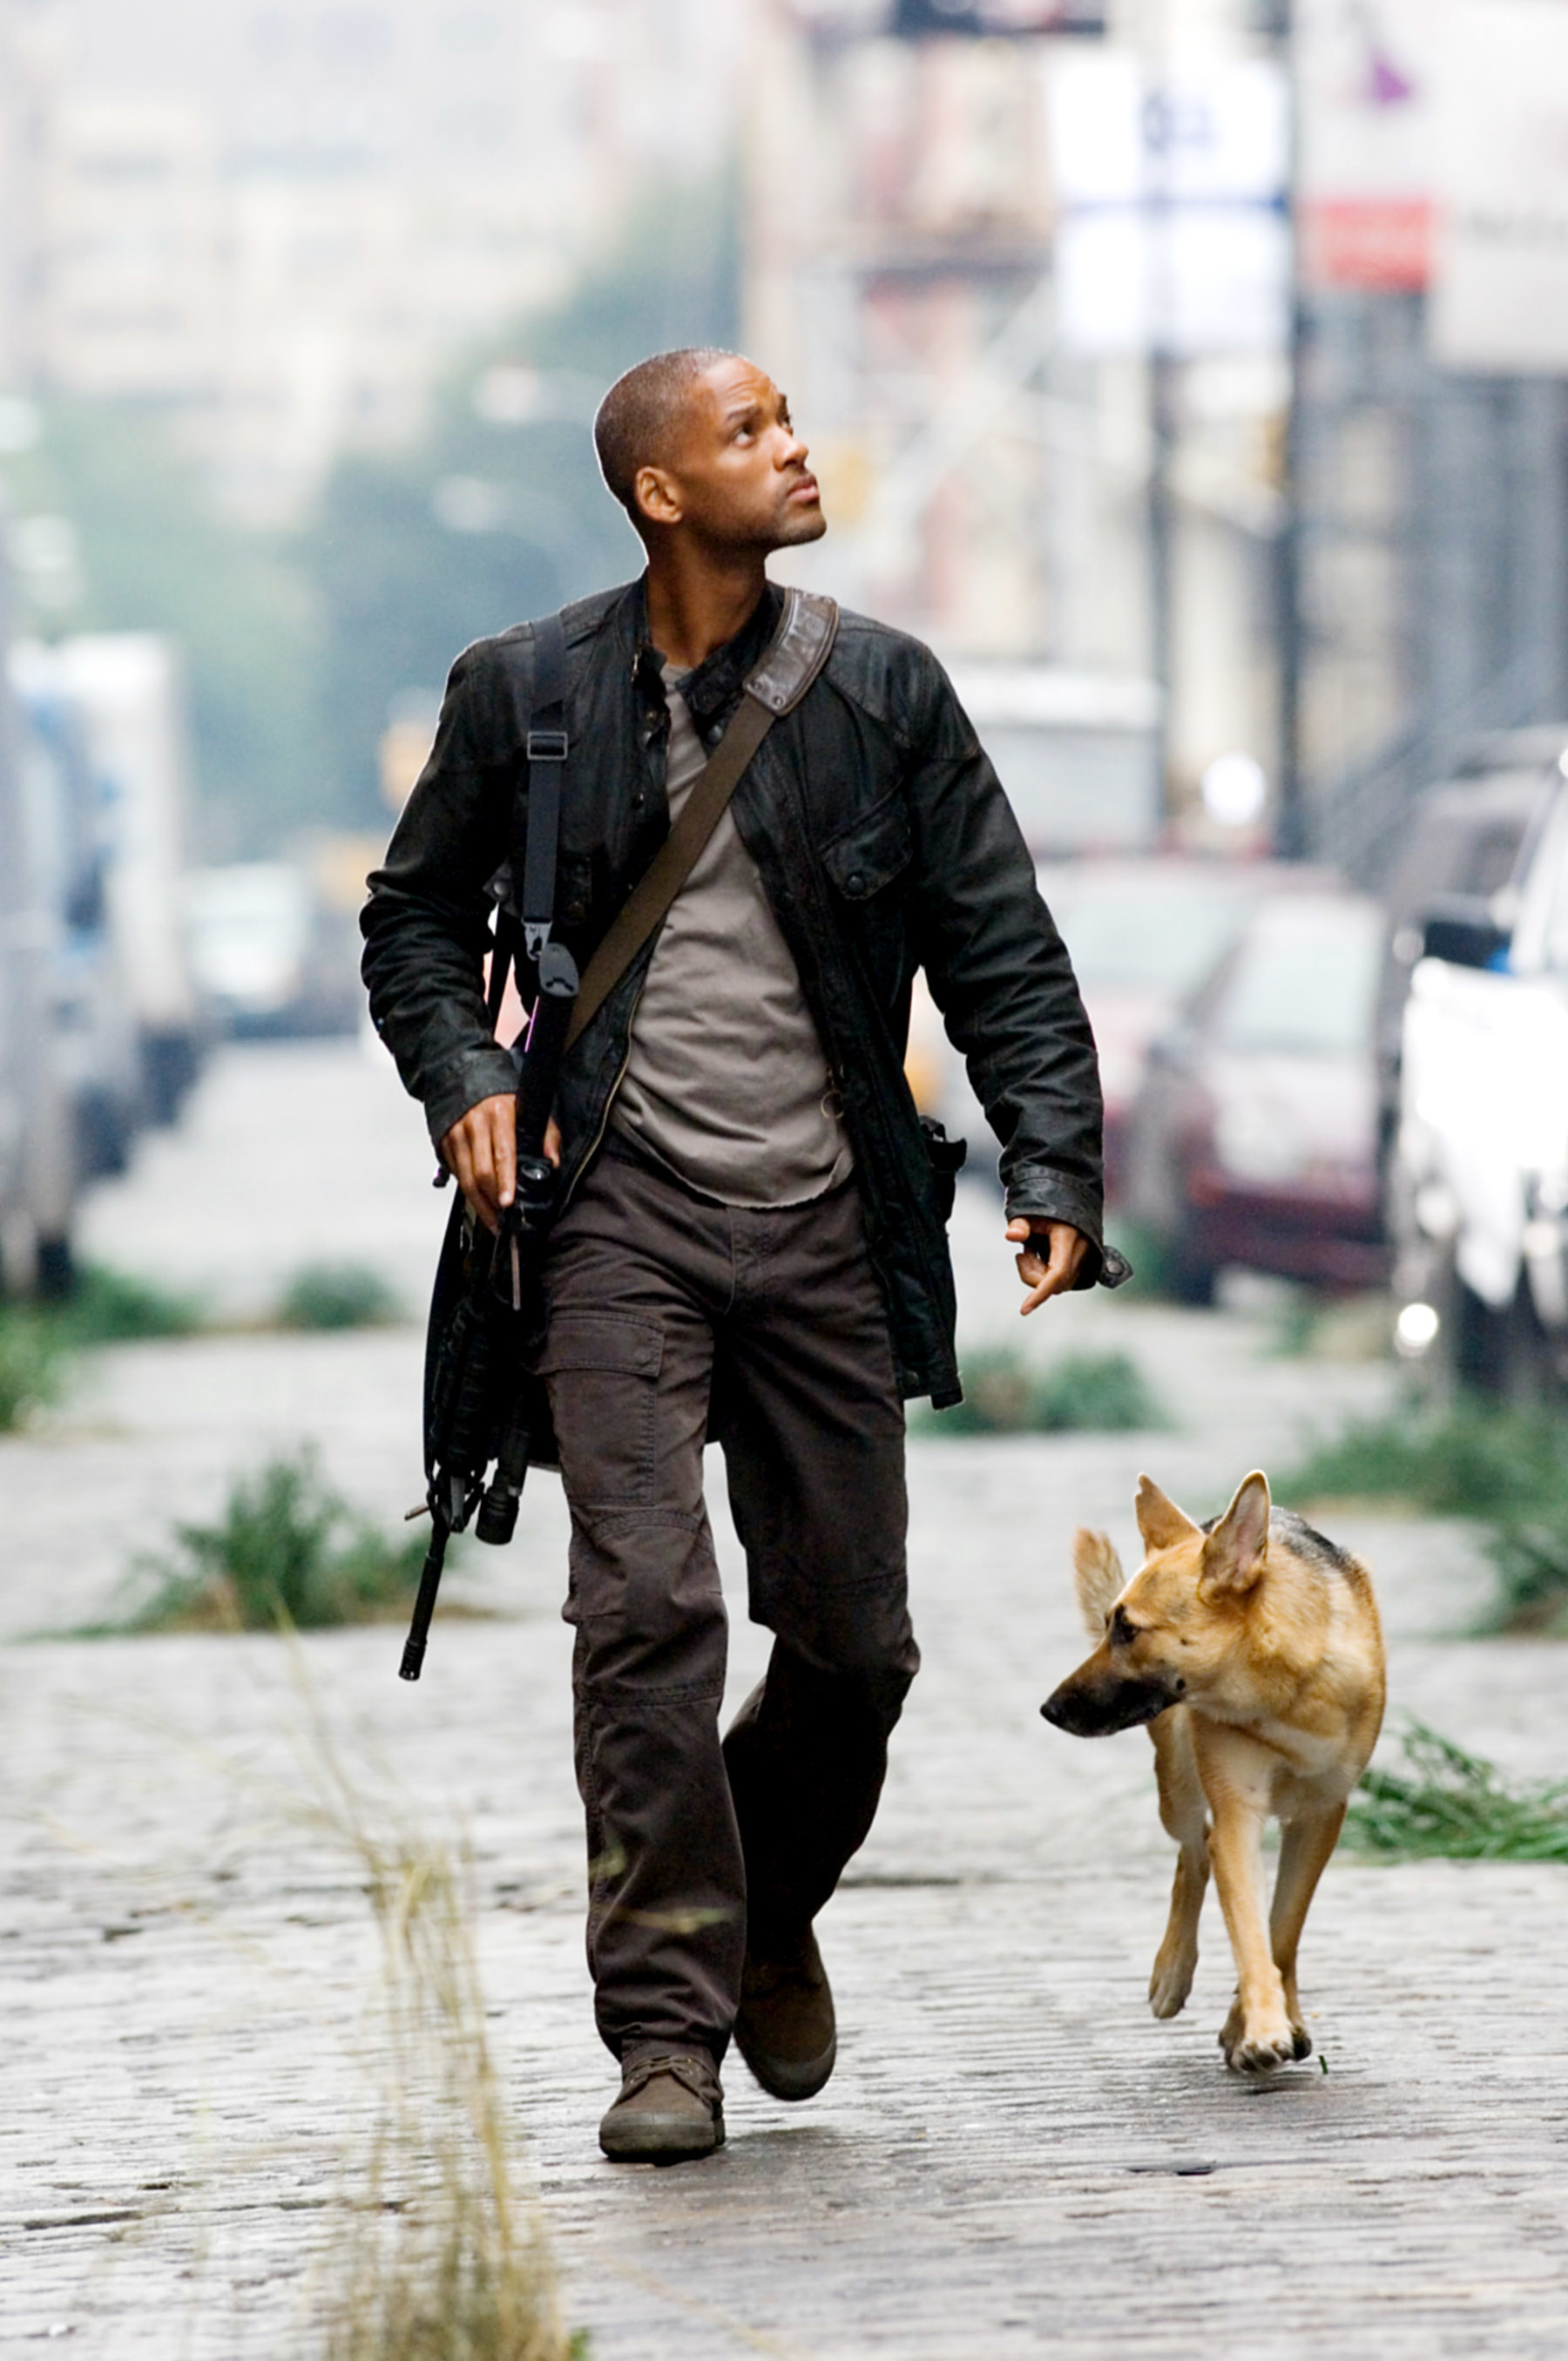 Will Smith walks through a desolate New York